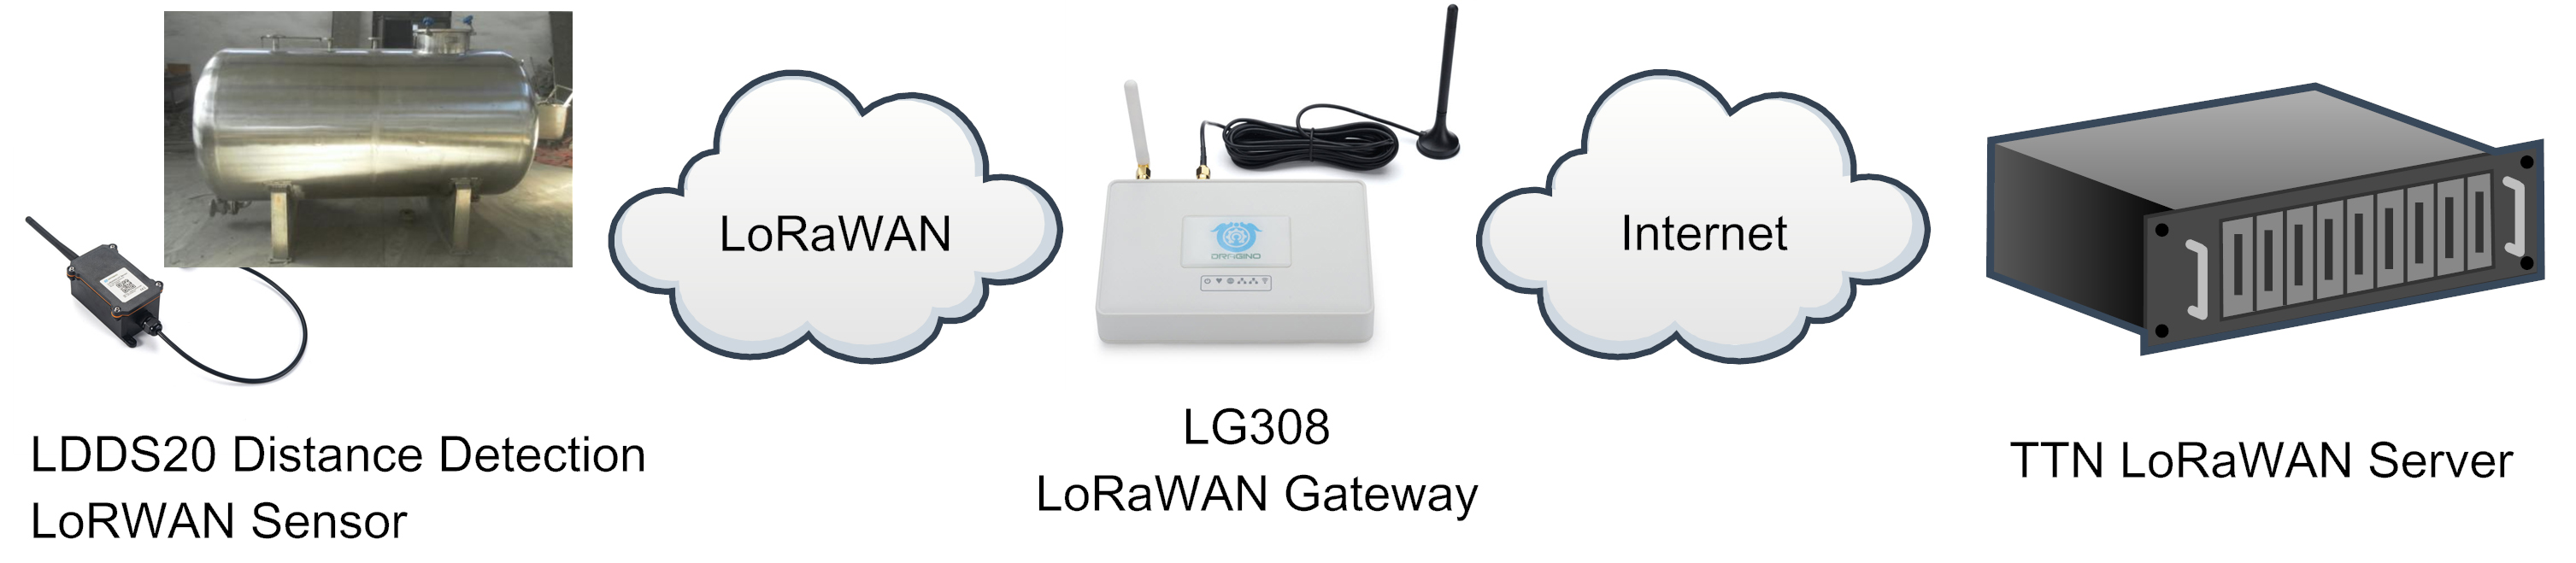 Dragino LDDS20 LoRaWAN Liquid Level Sensor (915 MHz) - Click to Enlarge